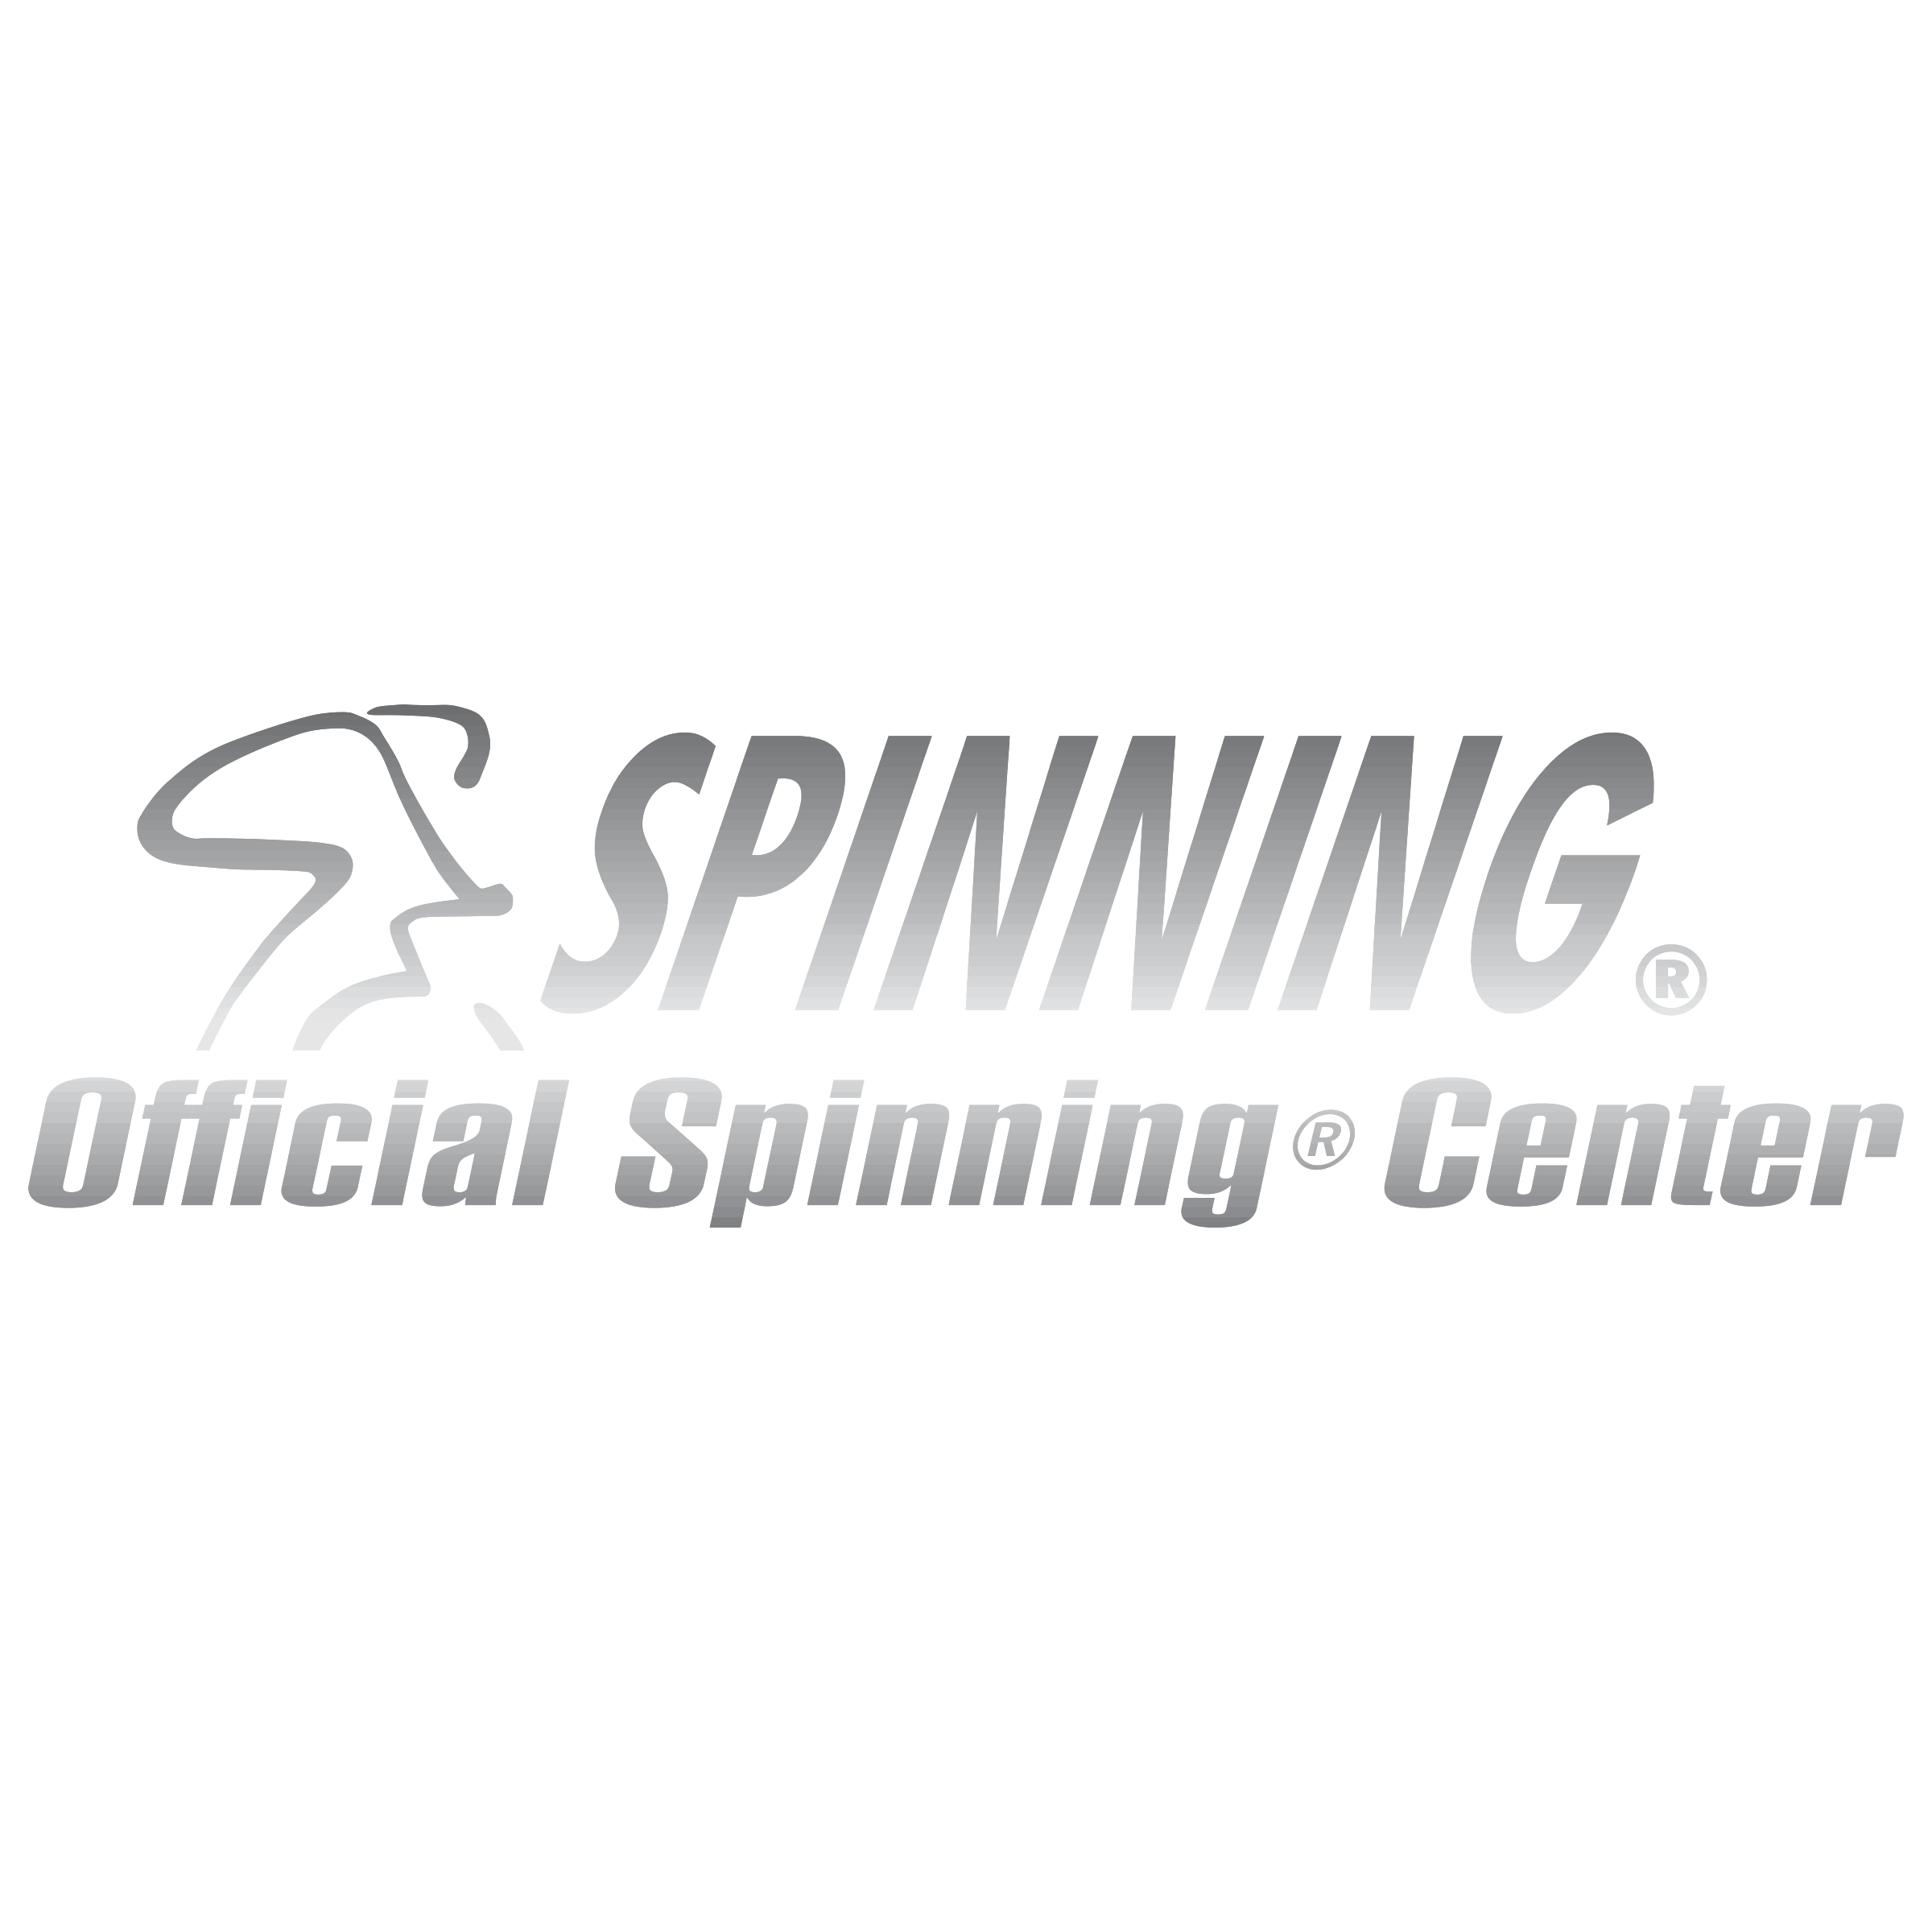 Spinning Logo - Spinning Logo PNG Transparent & SVG Vector - Freebie Supply